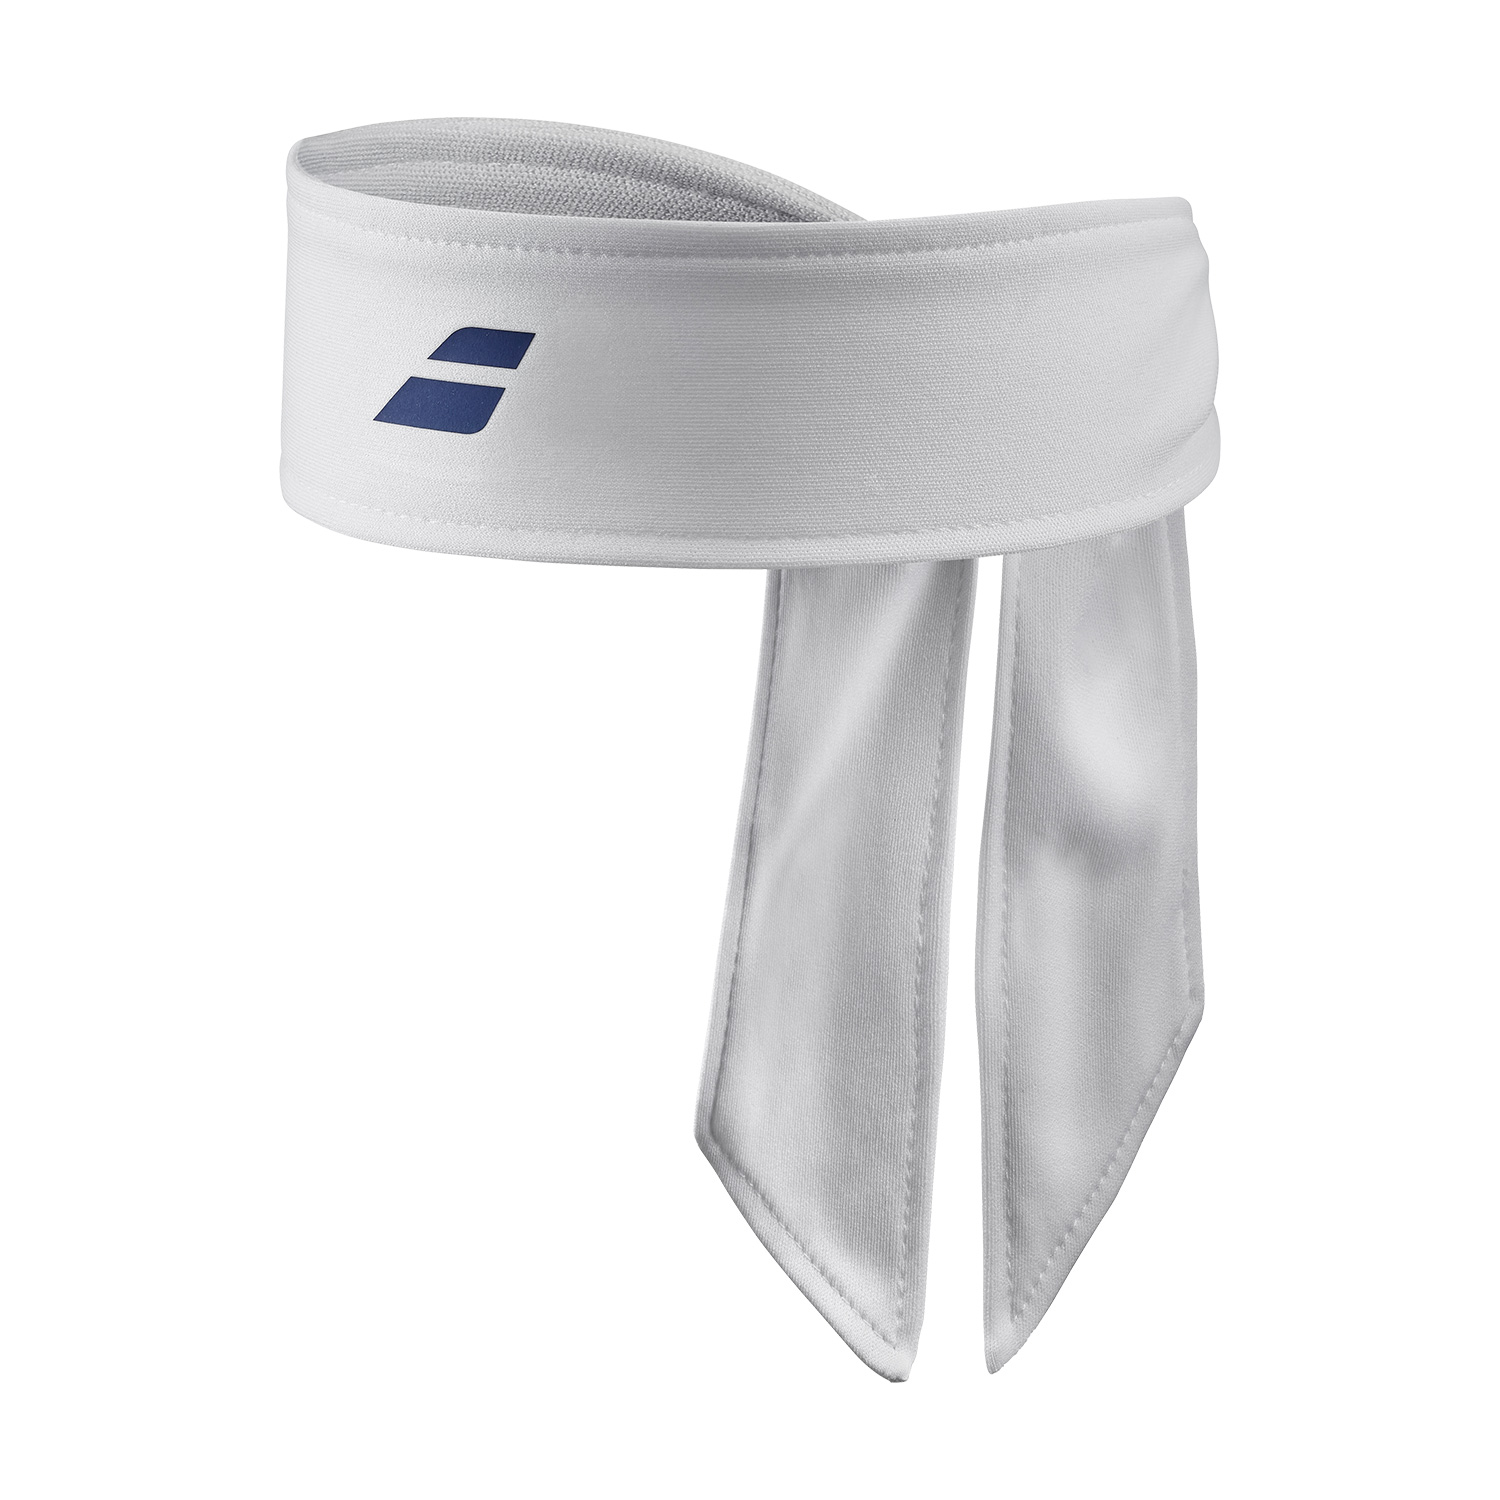 Babolat Tie Headband - White/Sodalite Blue